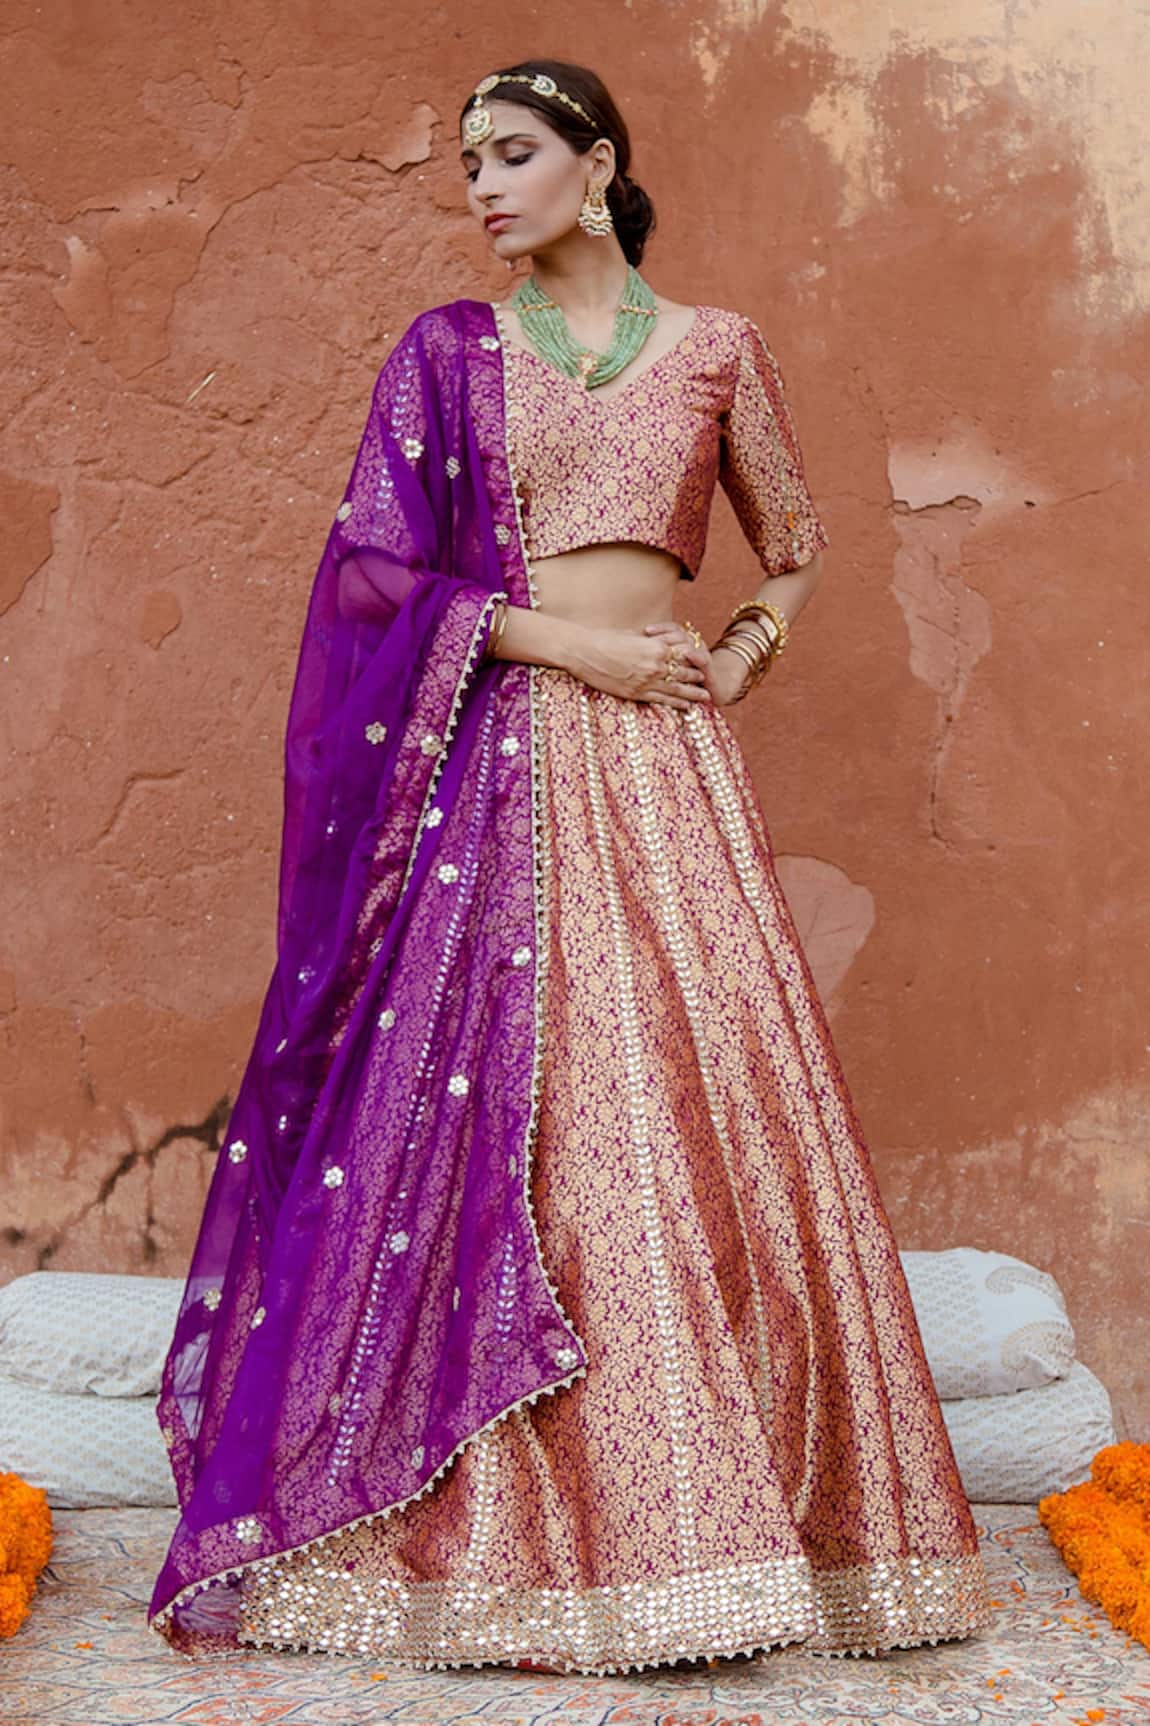 Lehenga Set Sunset Pink and Gold Size LARGE: Krishna Culture